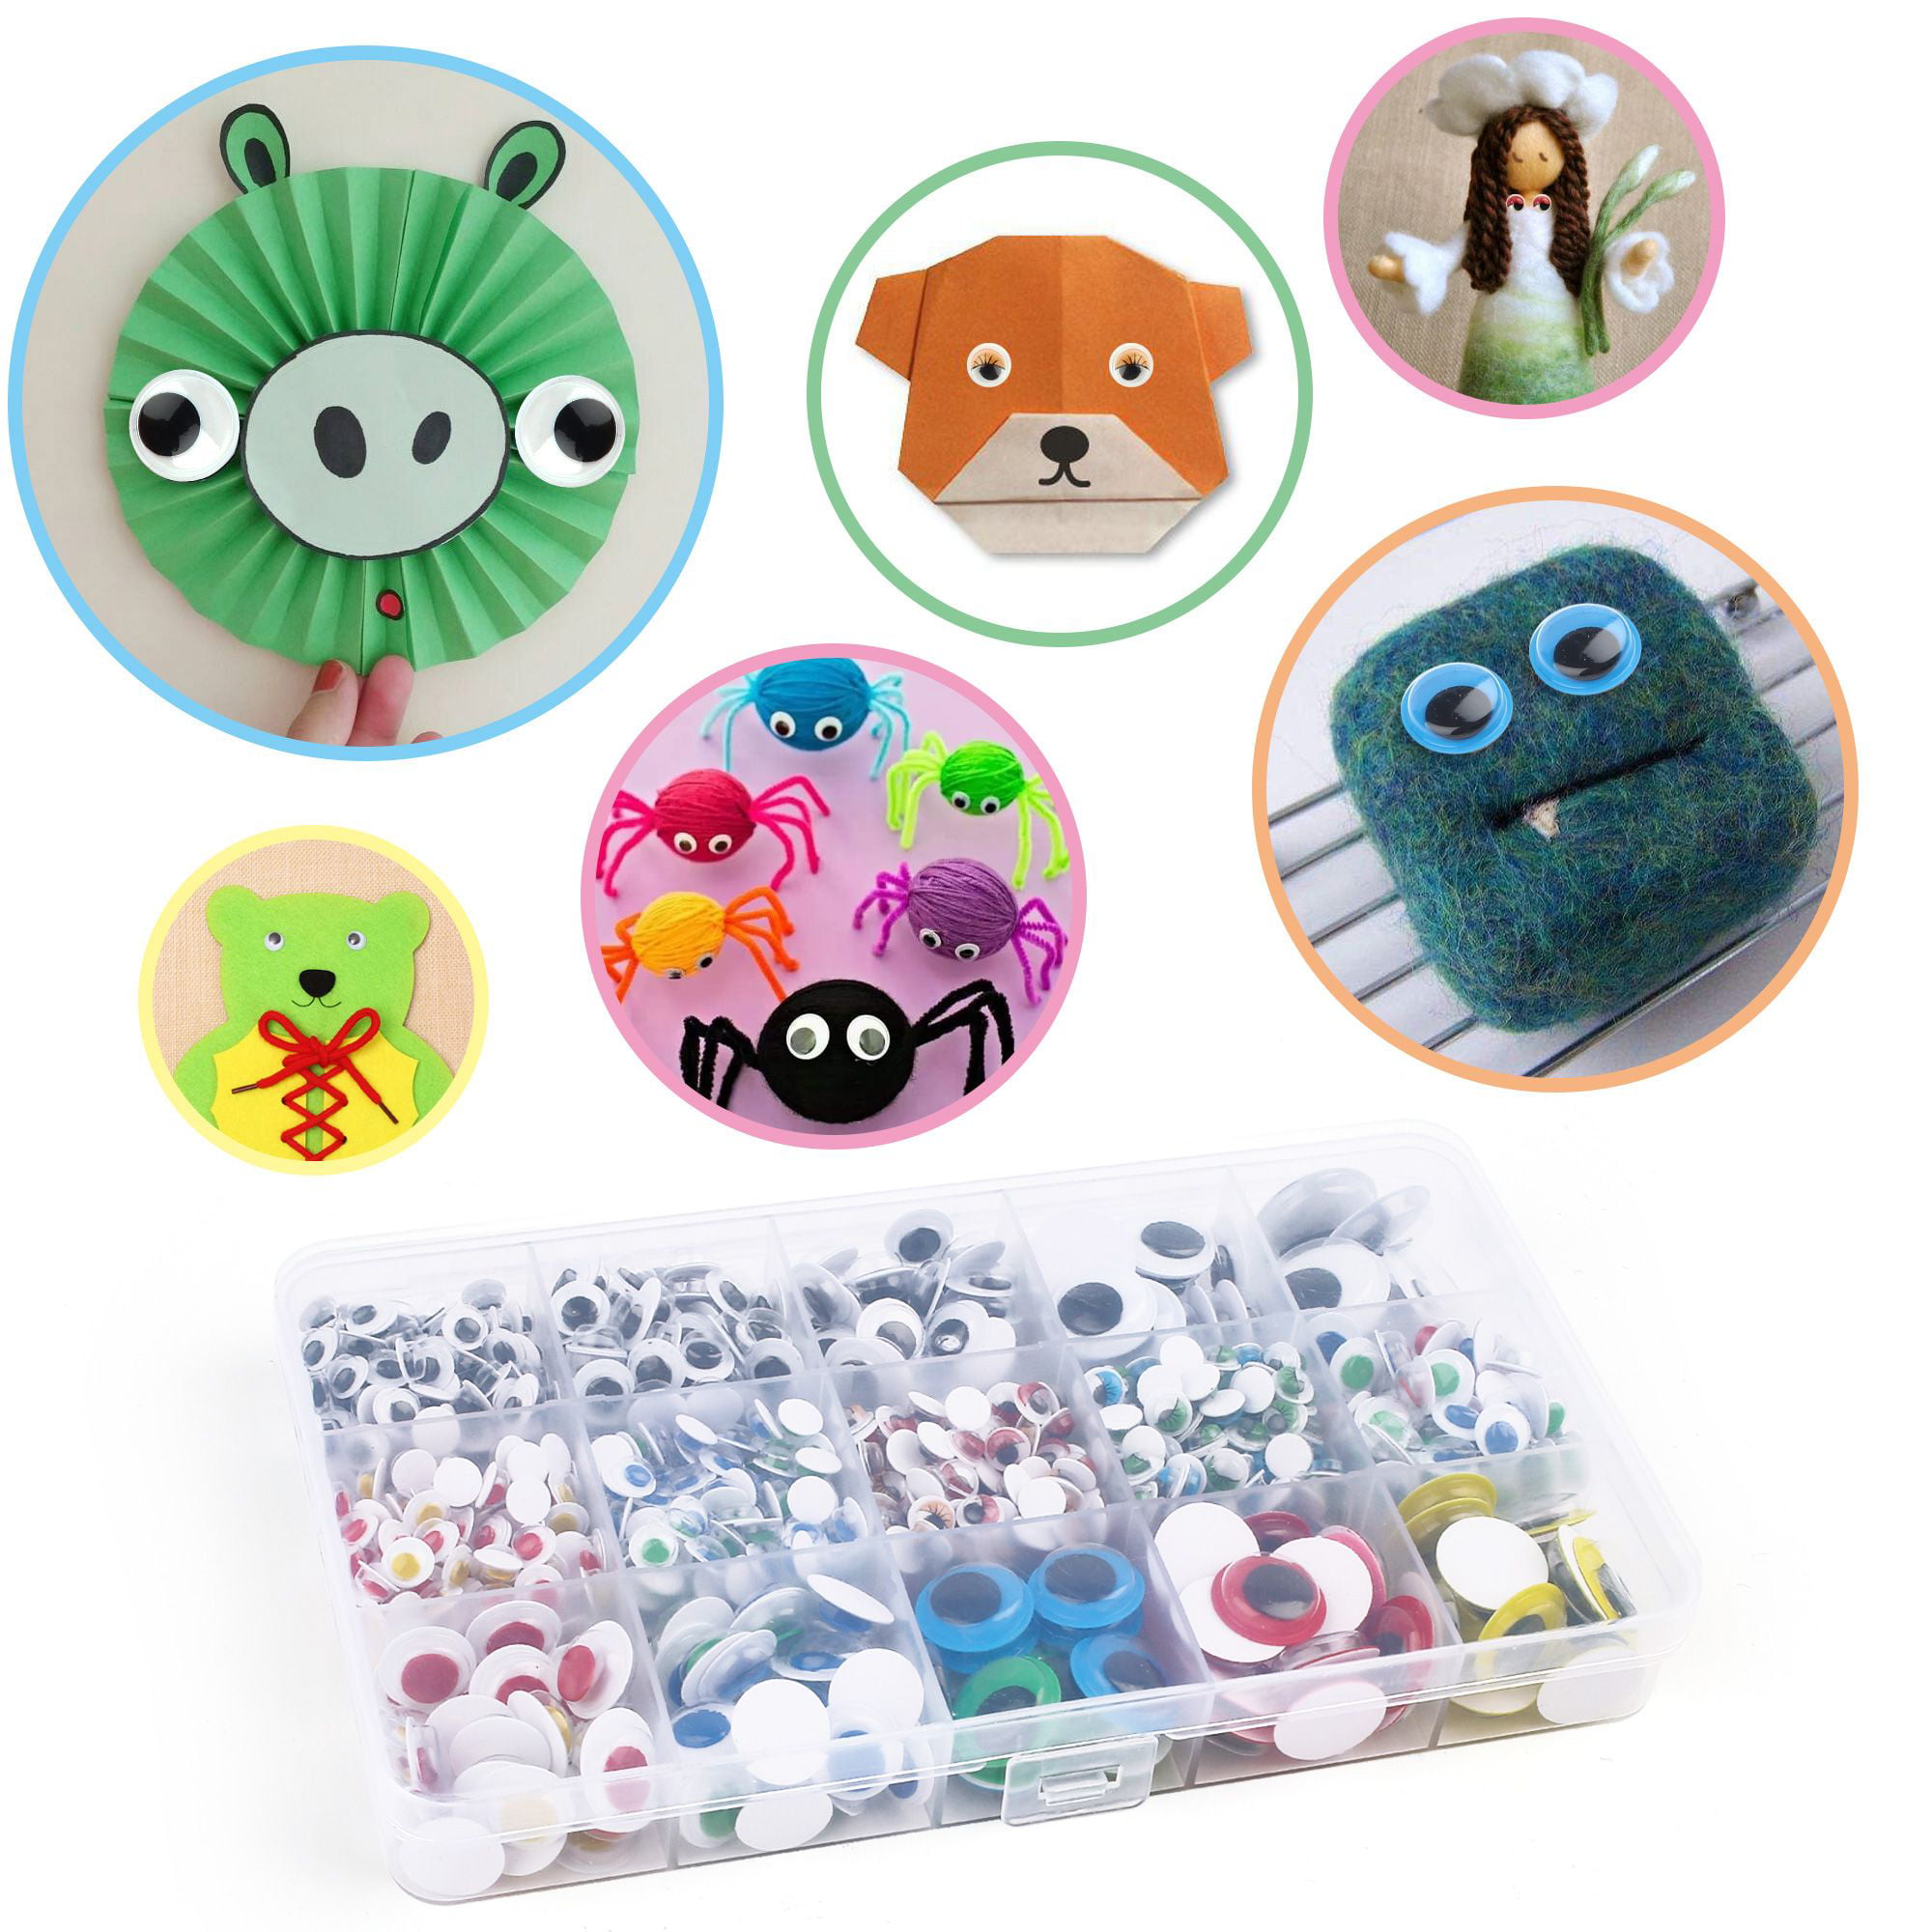 Premium Vector  Hand drawn cute googly eyes plastic toys set